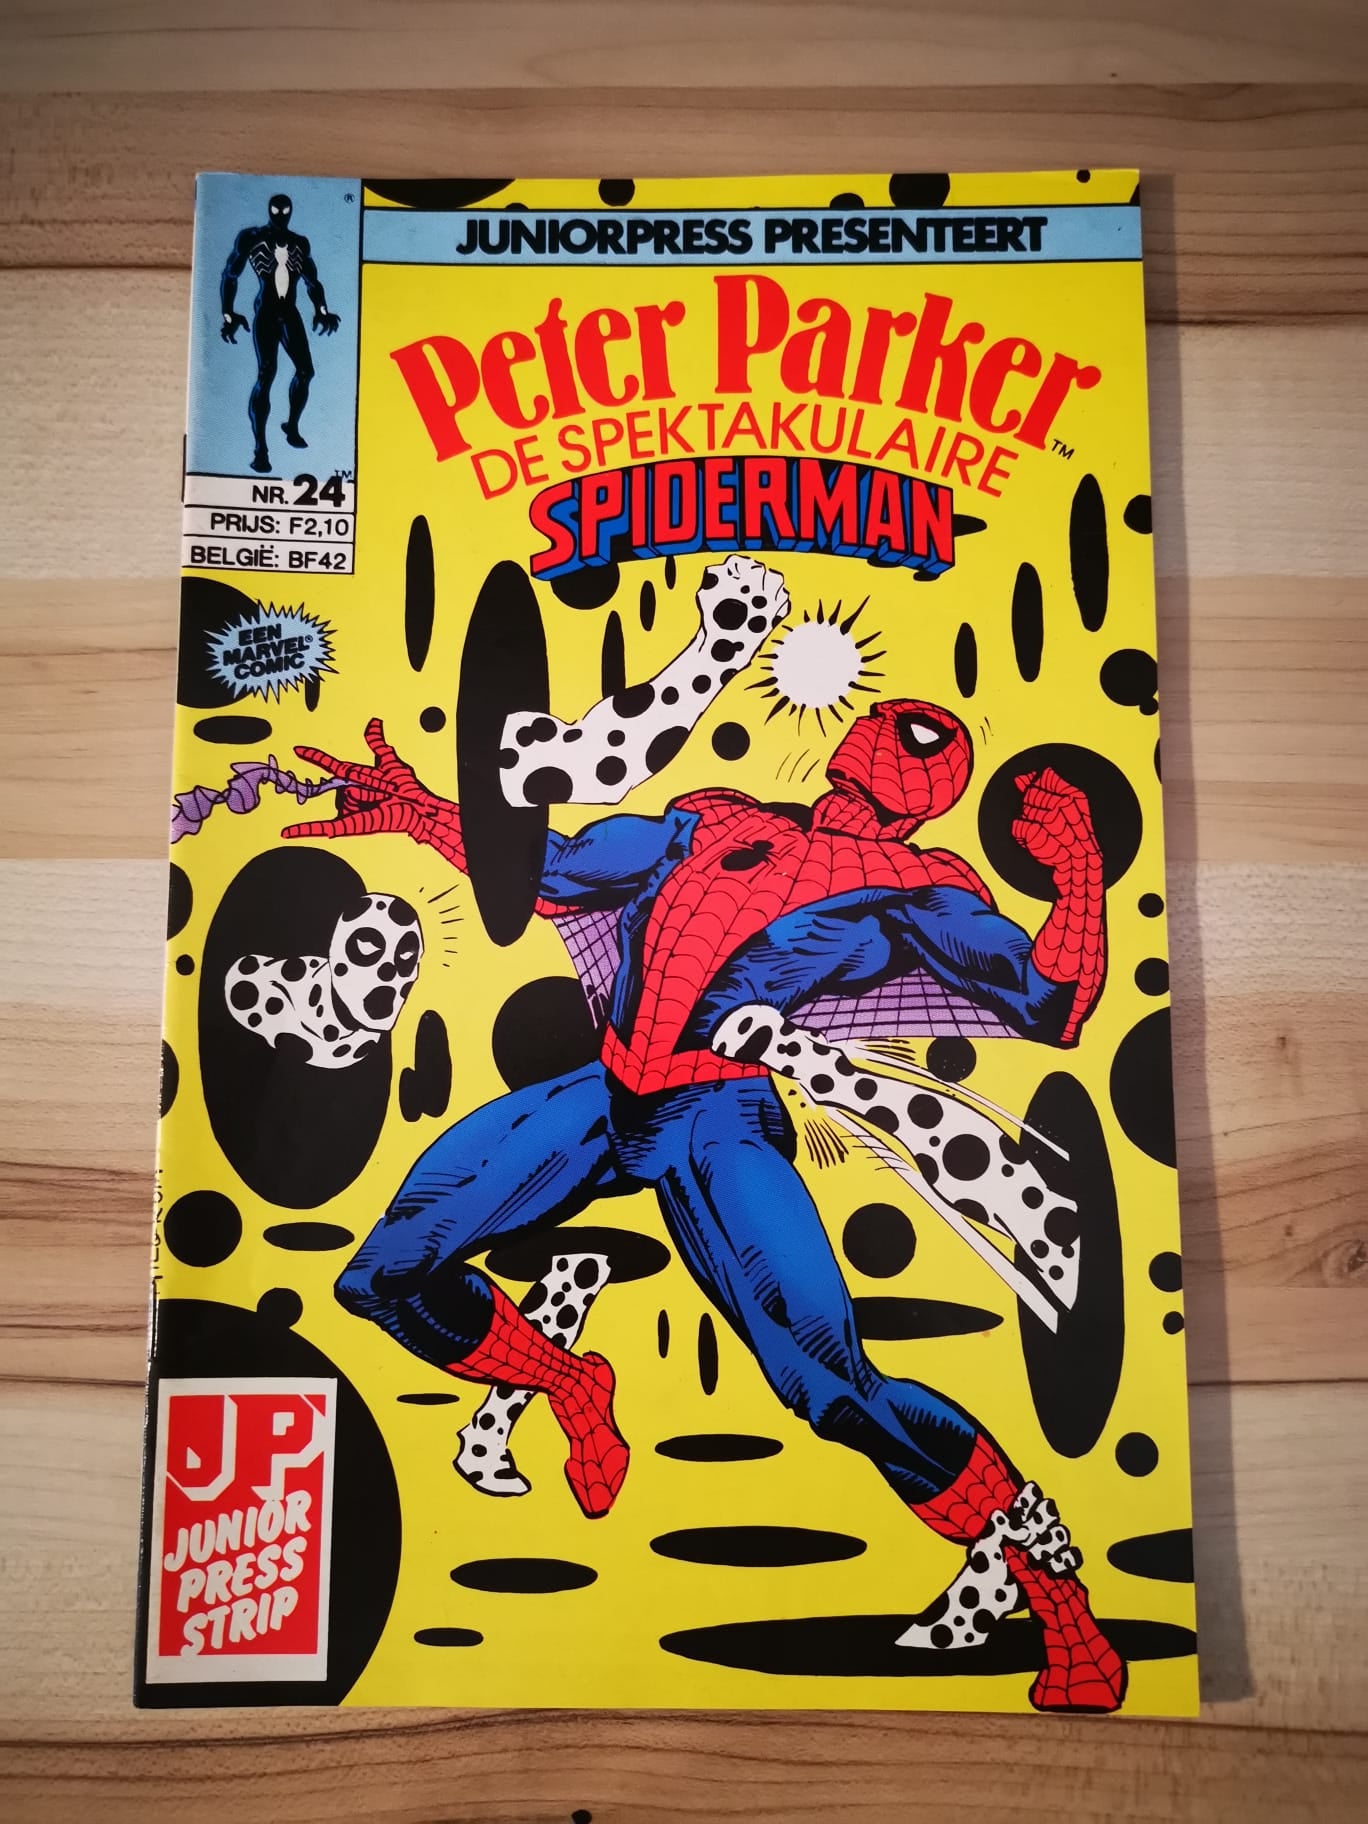 Peter Parker De spektakulaire spiderman #24